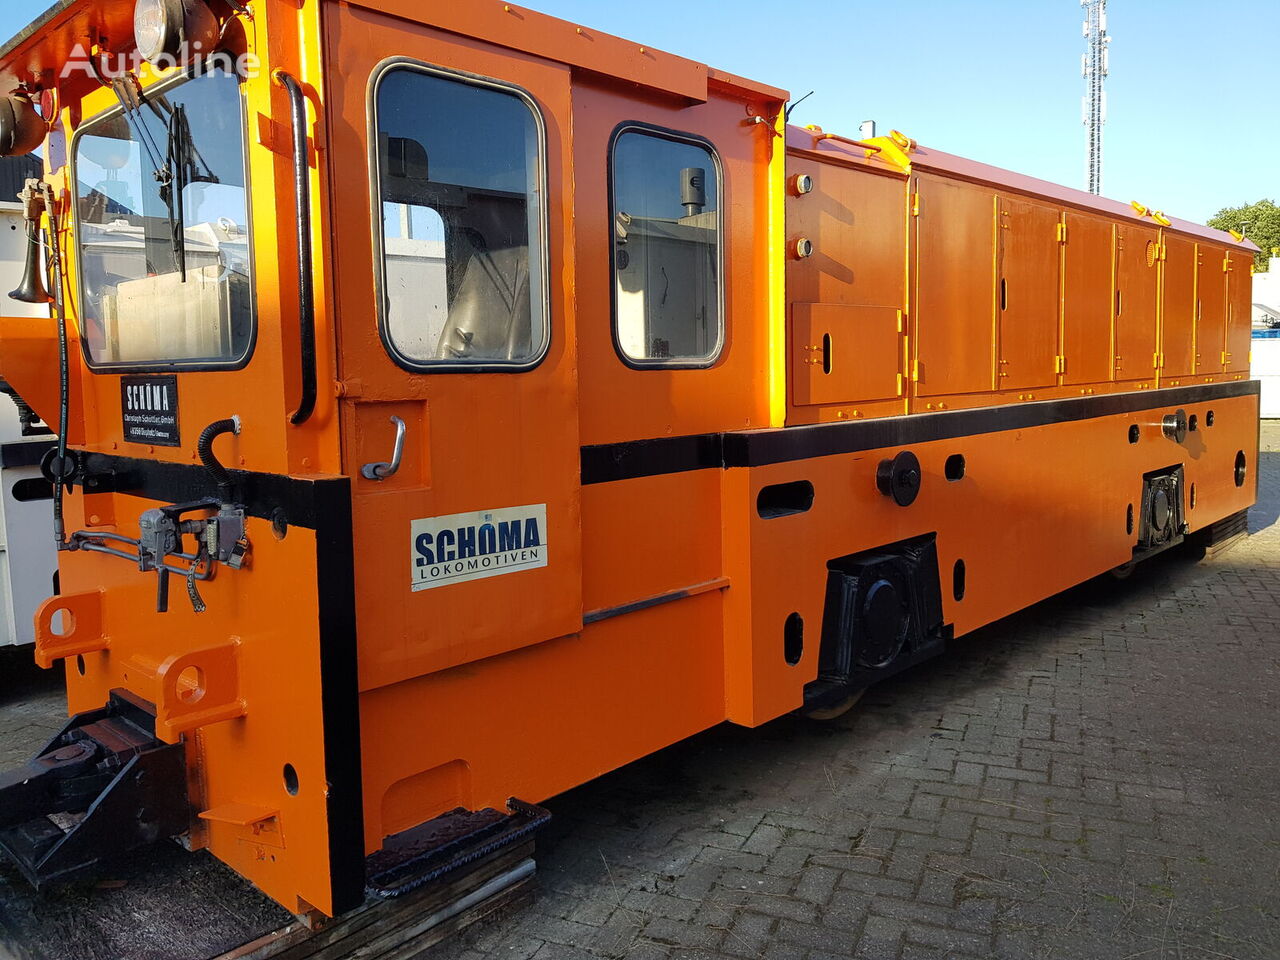 локомотив Deutz Schoema CFL 200 DCL 40 ton